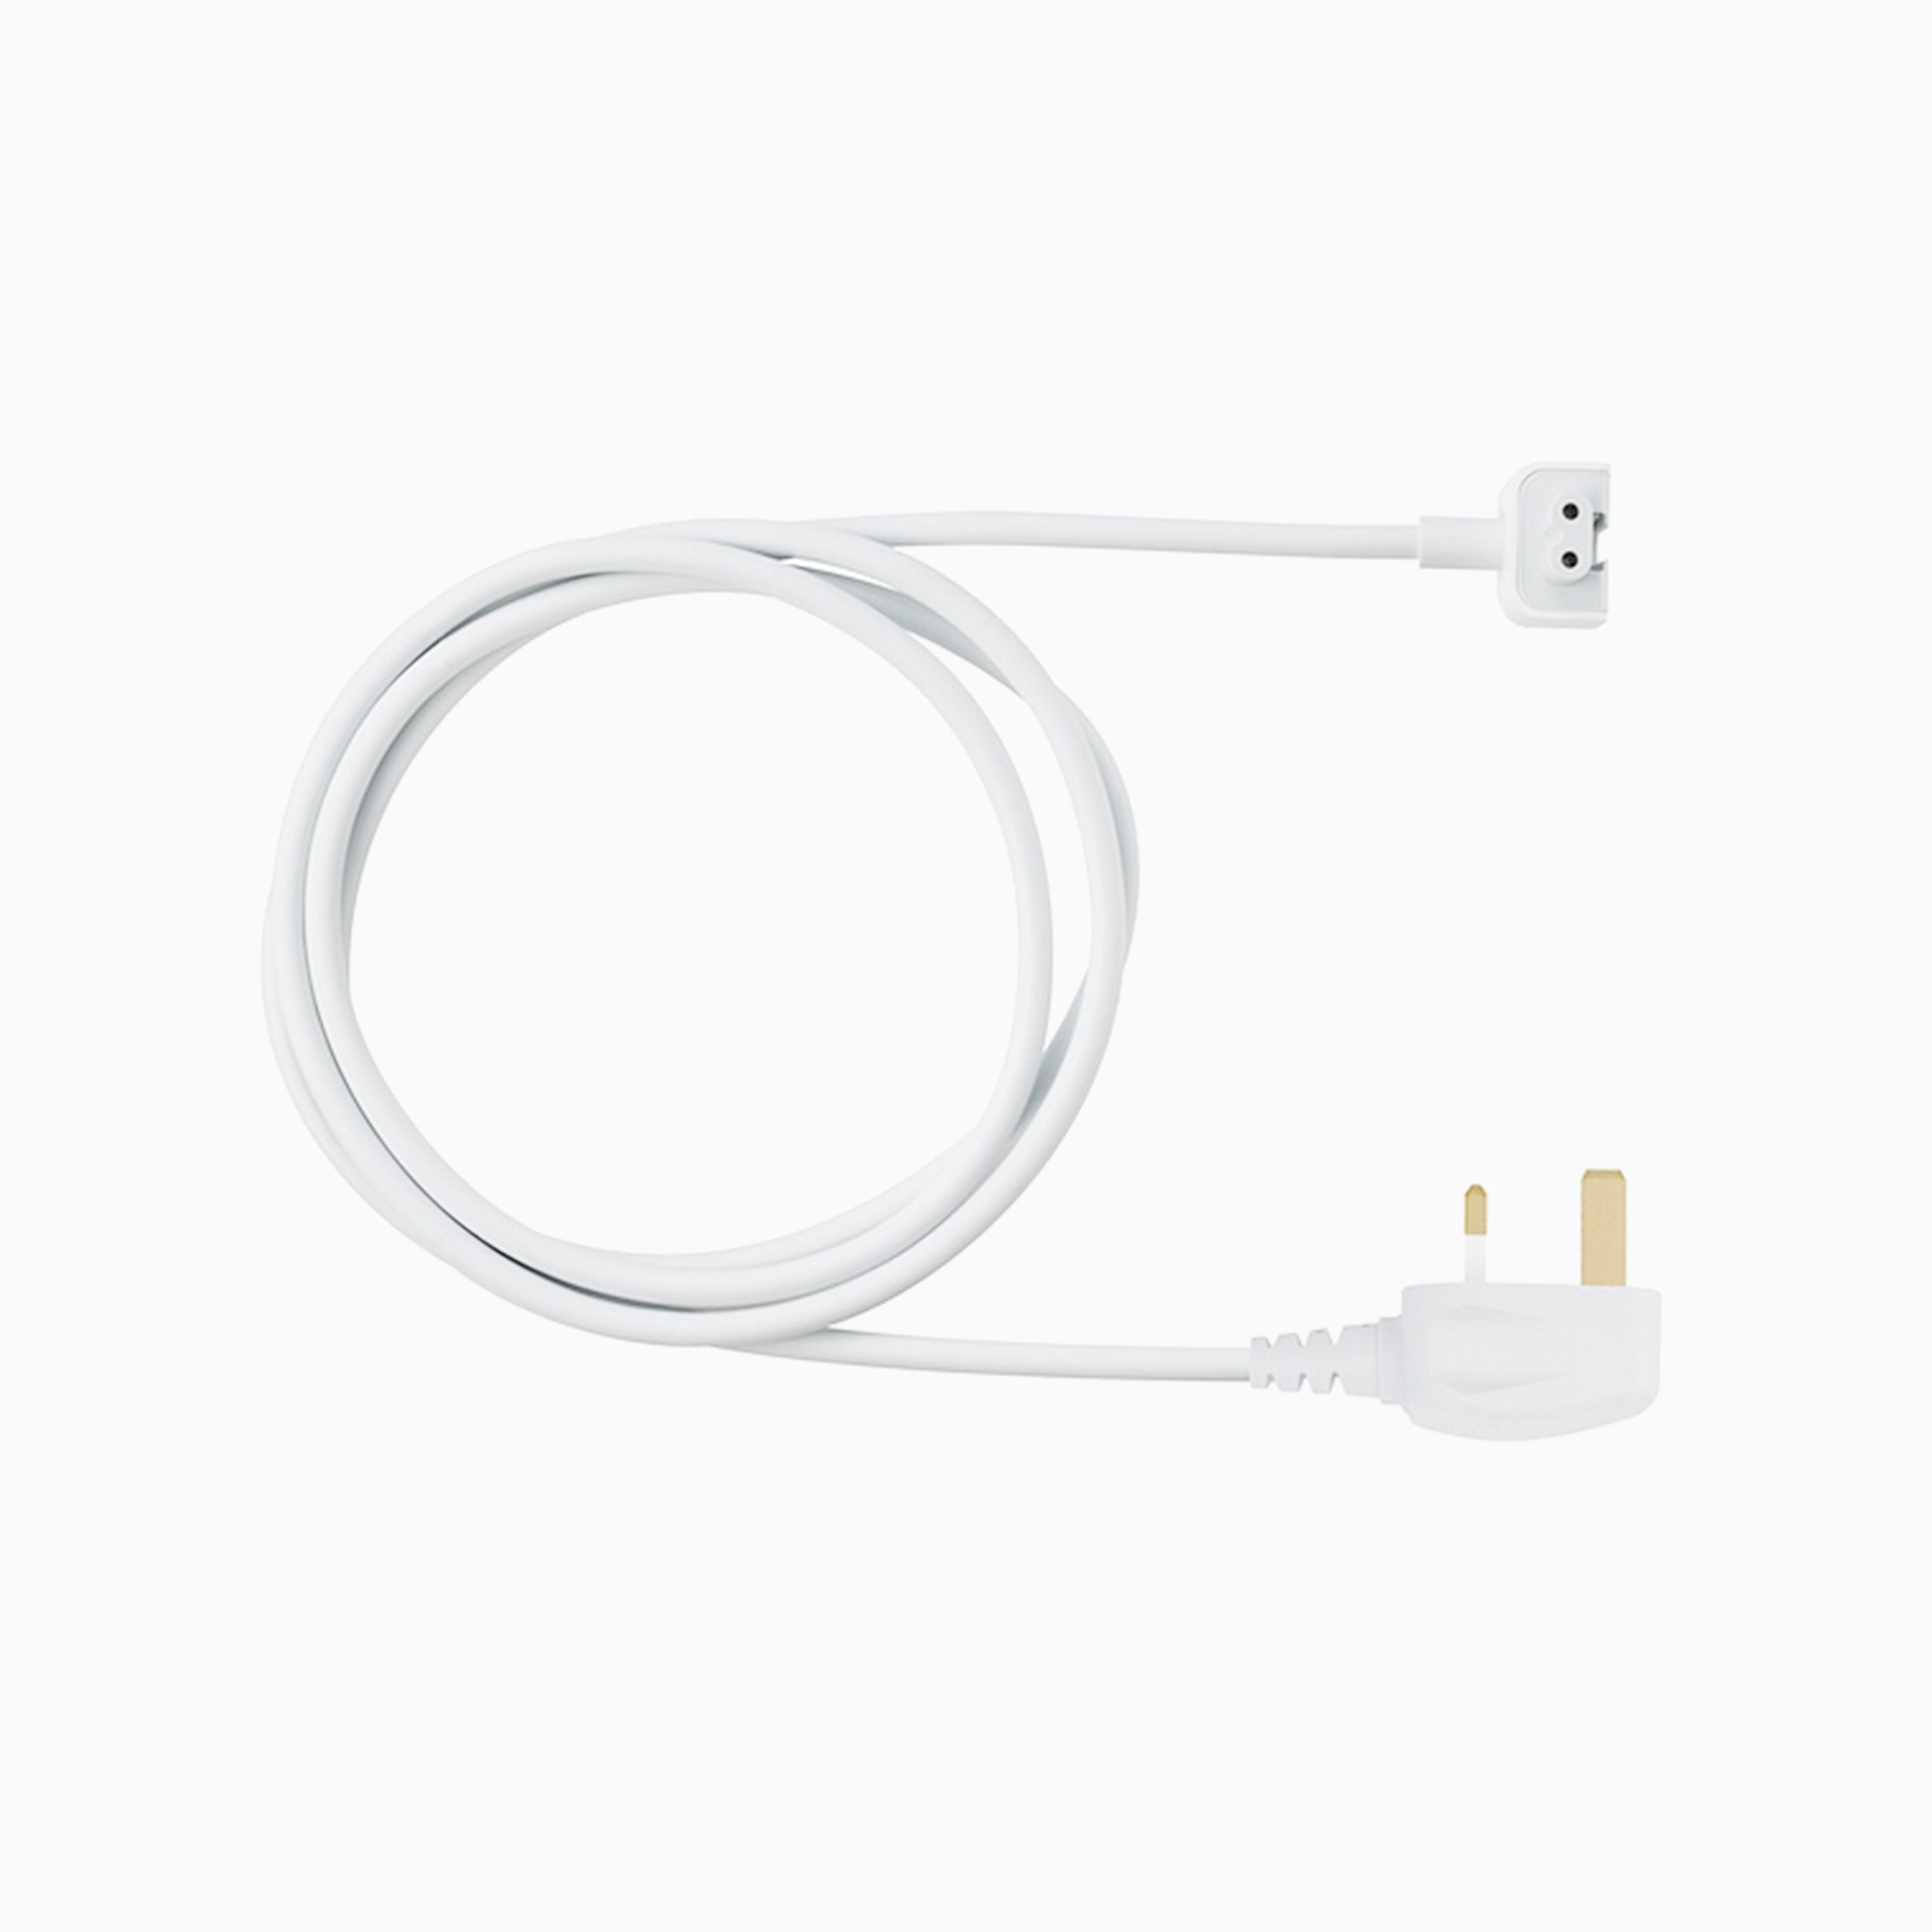 1 x Apple MacBook Pro Retina 15 Inch Quad-Core i7 2.60 GHz (2013)